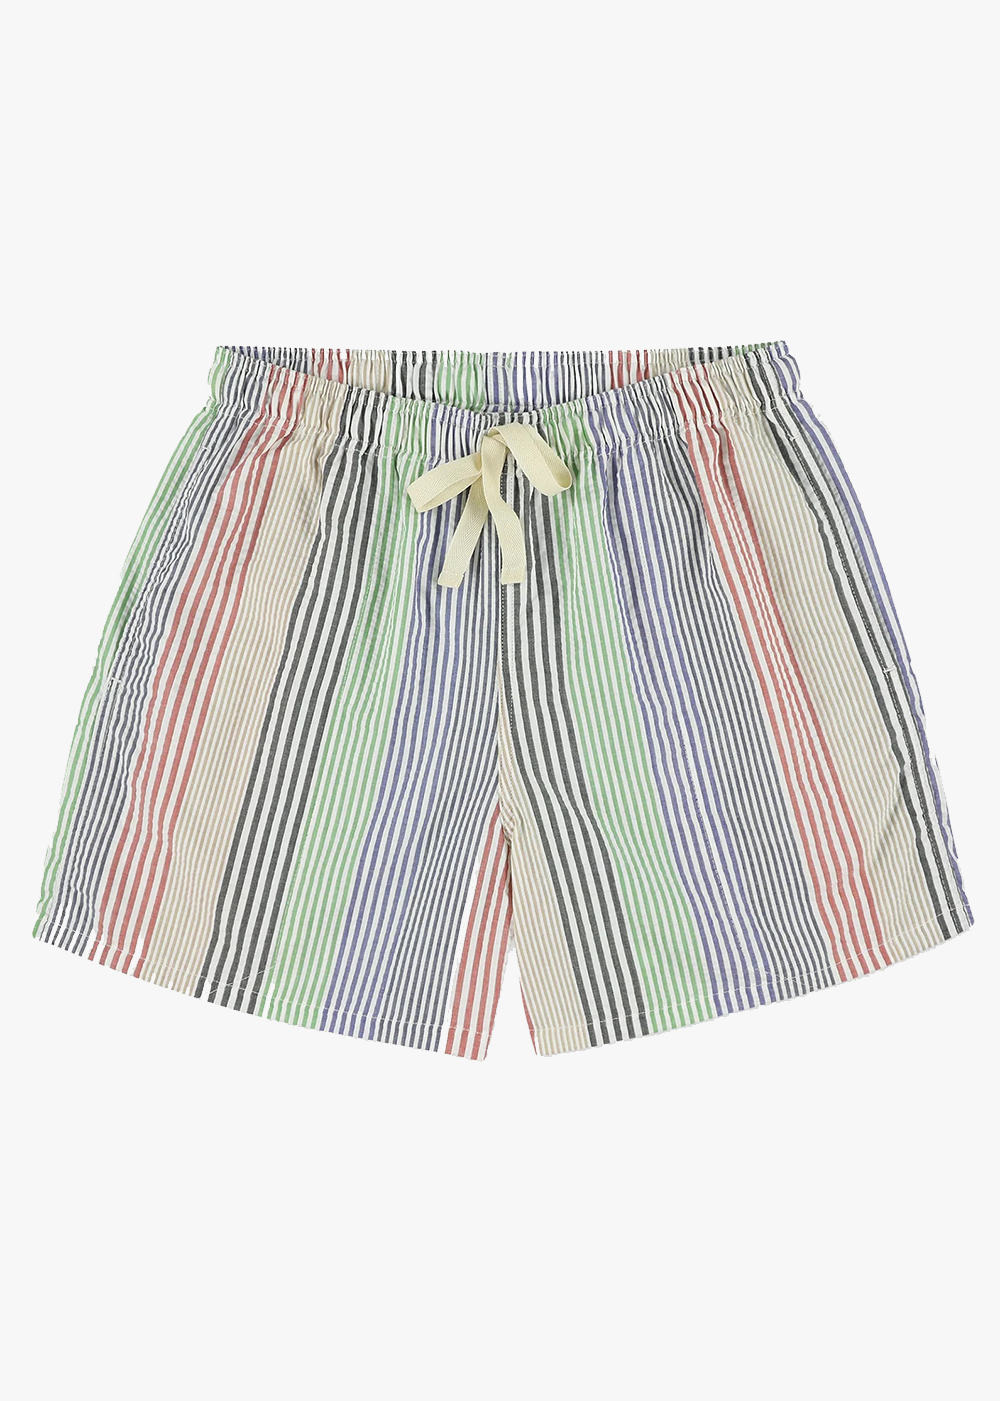 Private Stripe Seersucker Shorts - Stripe Mix - Howlin' Knitwear - Danali Canada